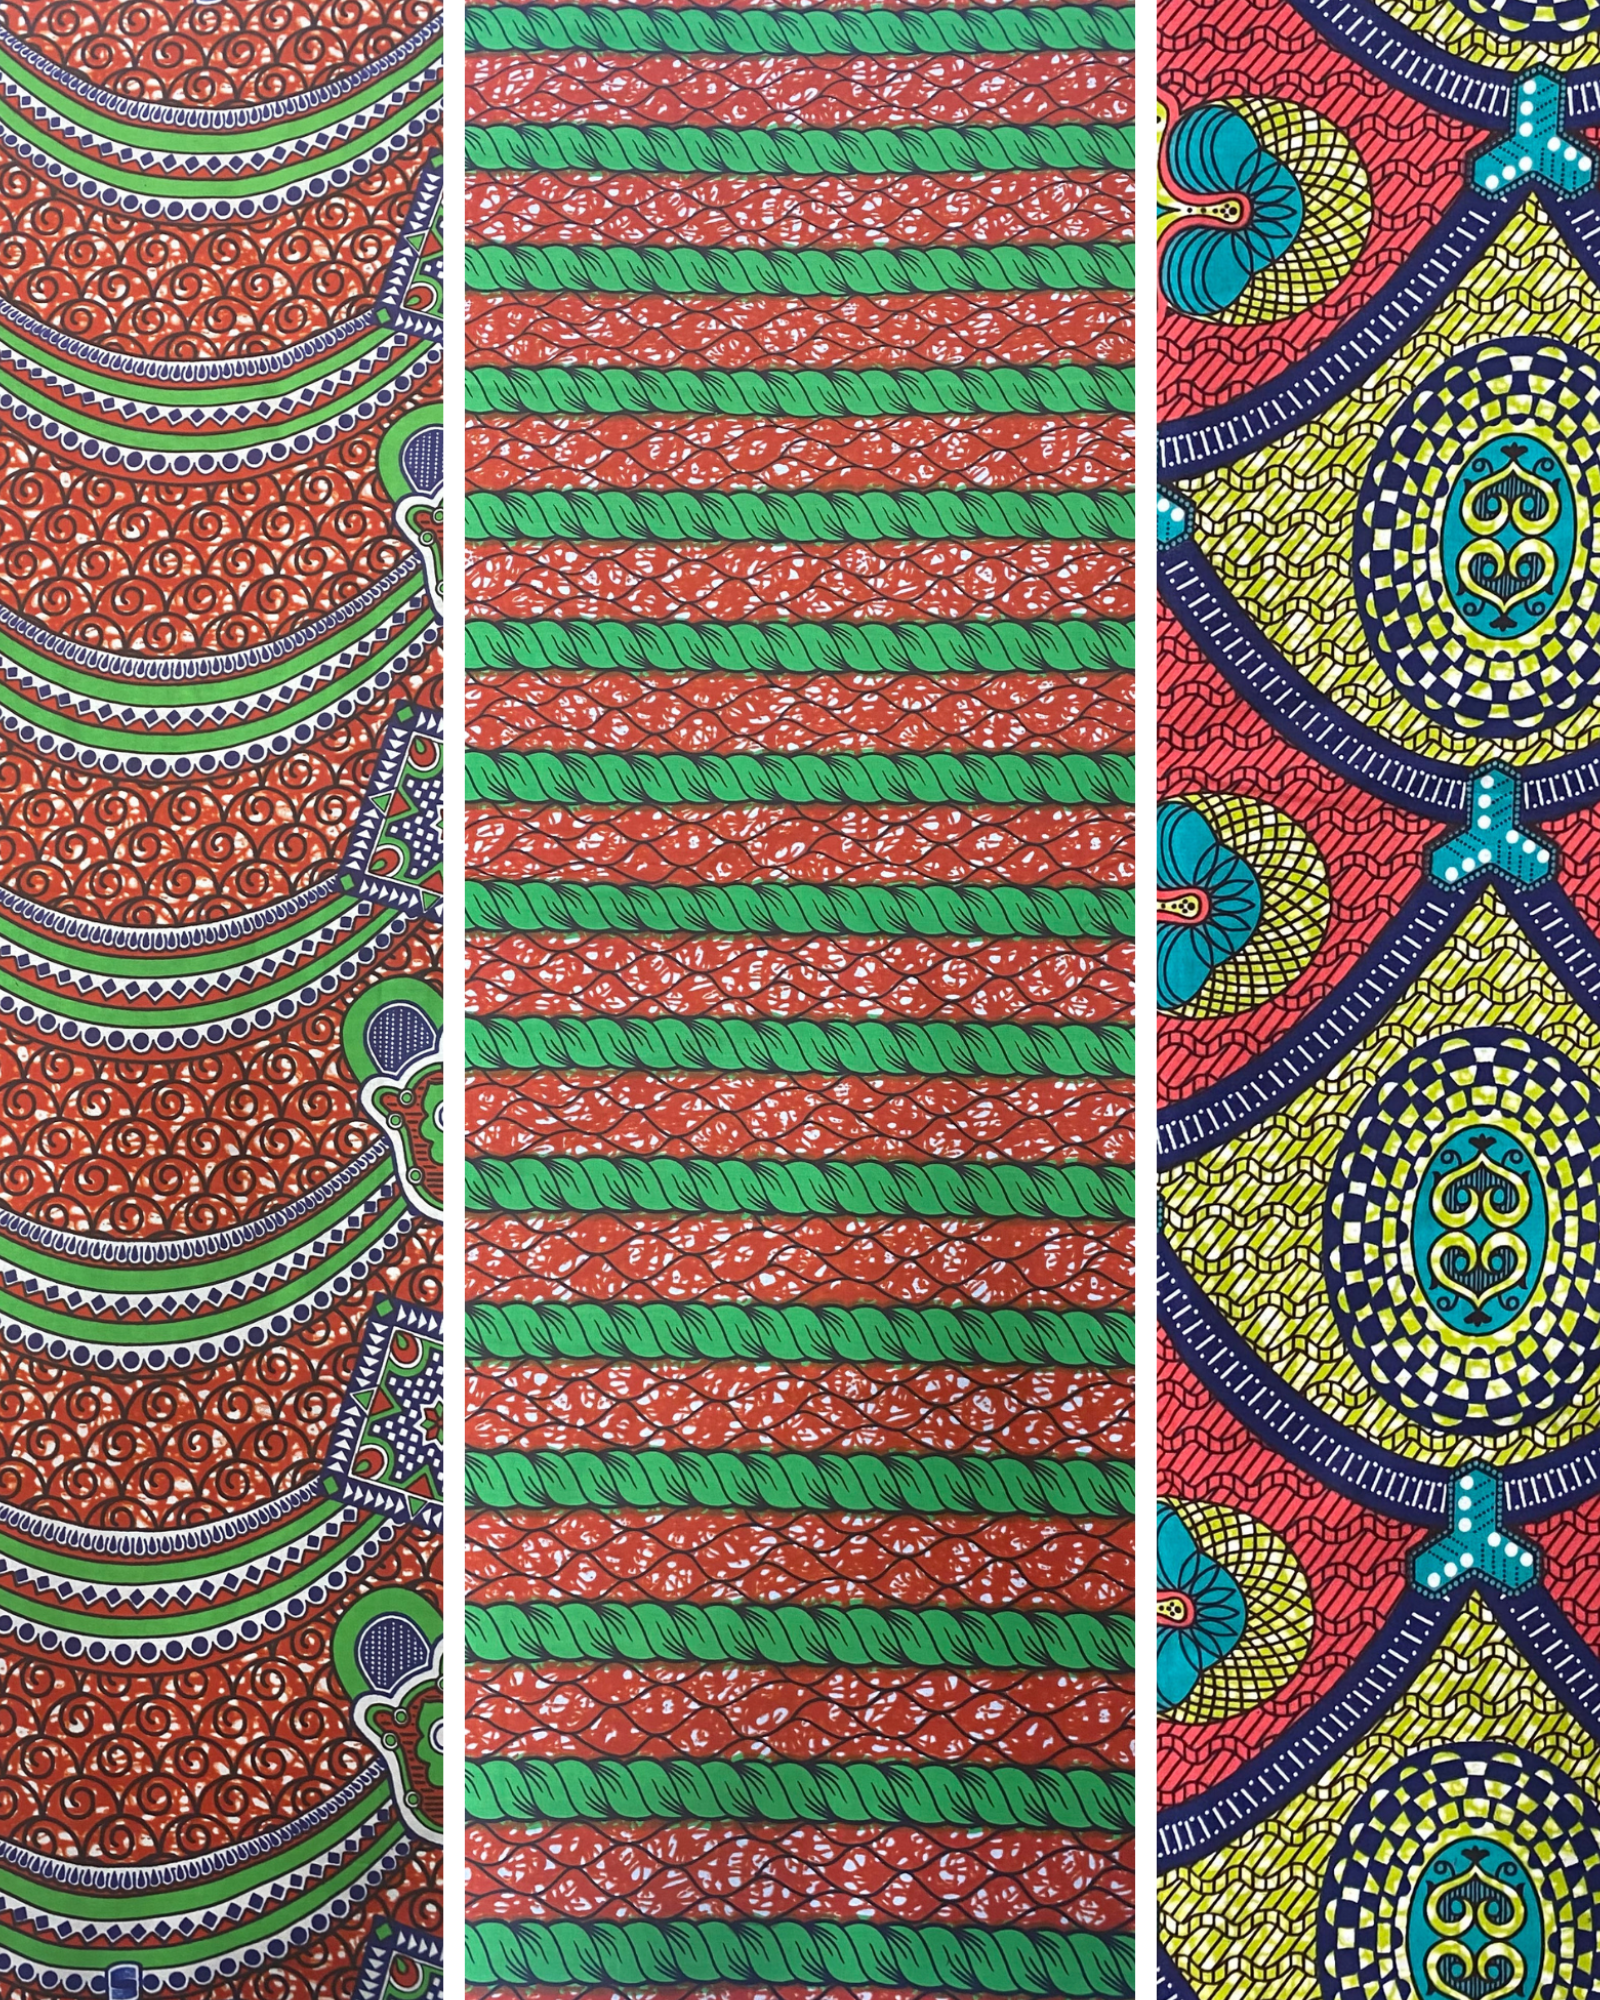 Decor Time Bundle: Vibrant African Print Fabric - 100% Cotton"